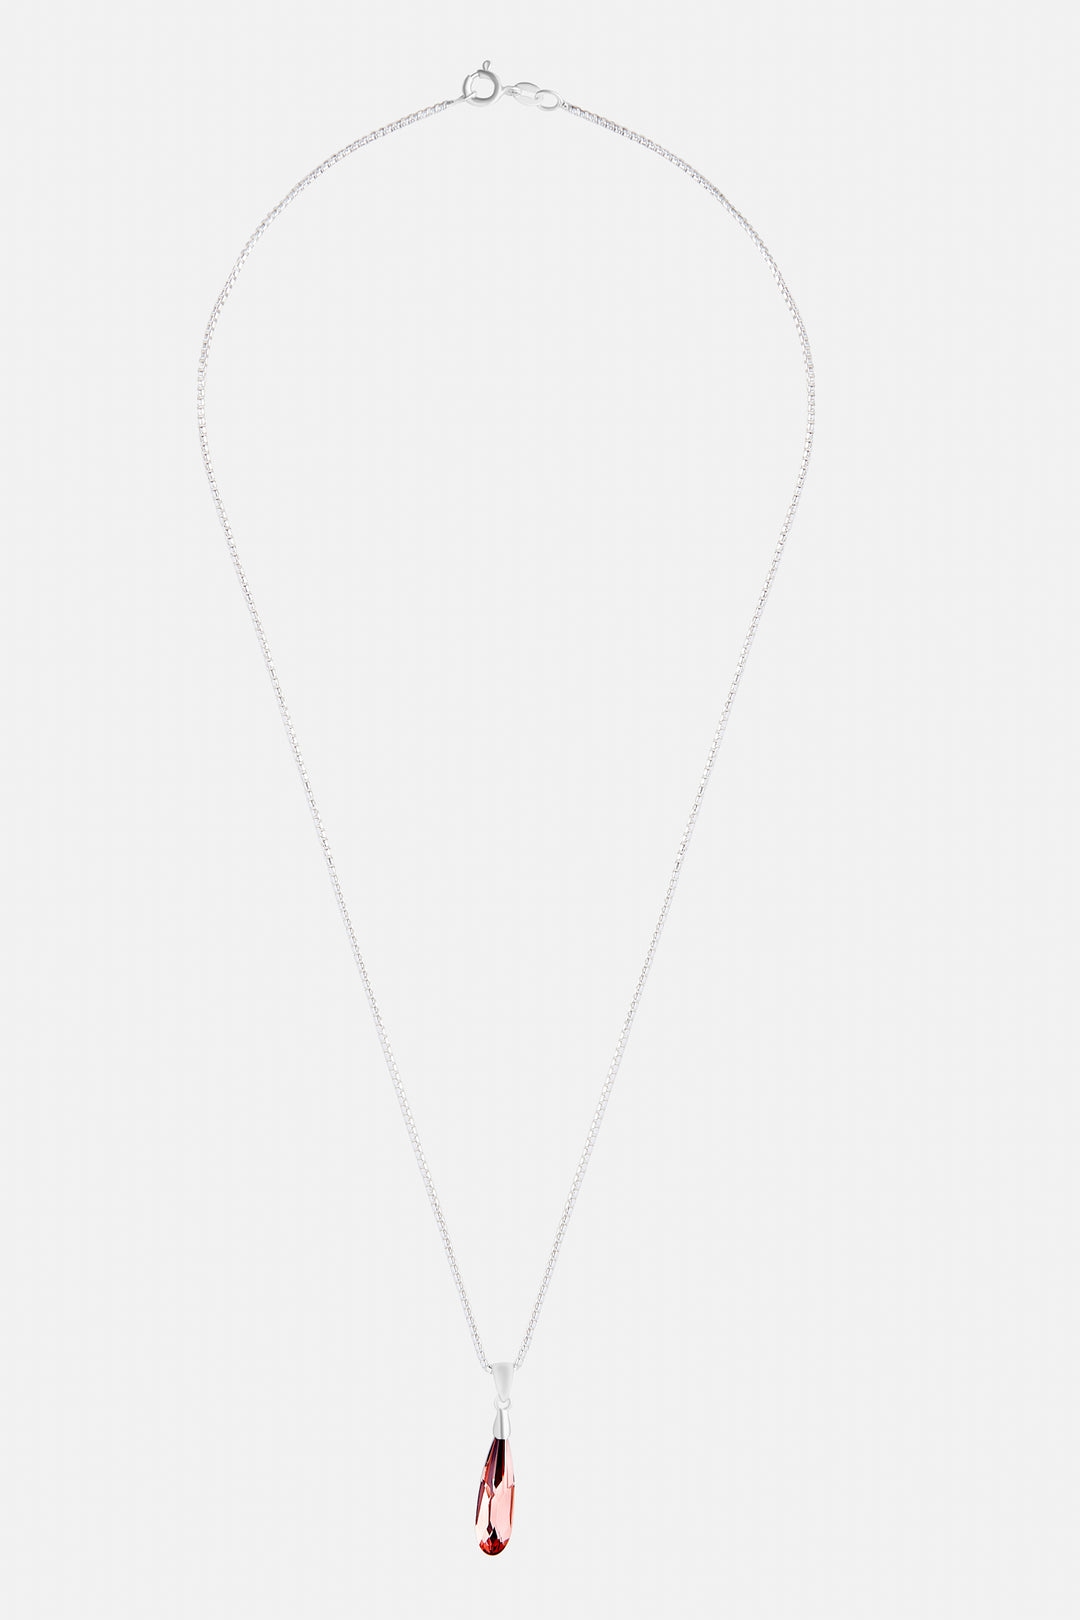 Sidra Rose Crystal Swarovski Pendant & Chain Necklace